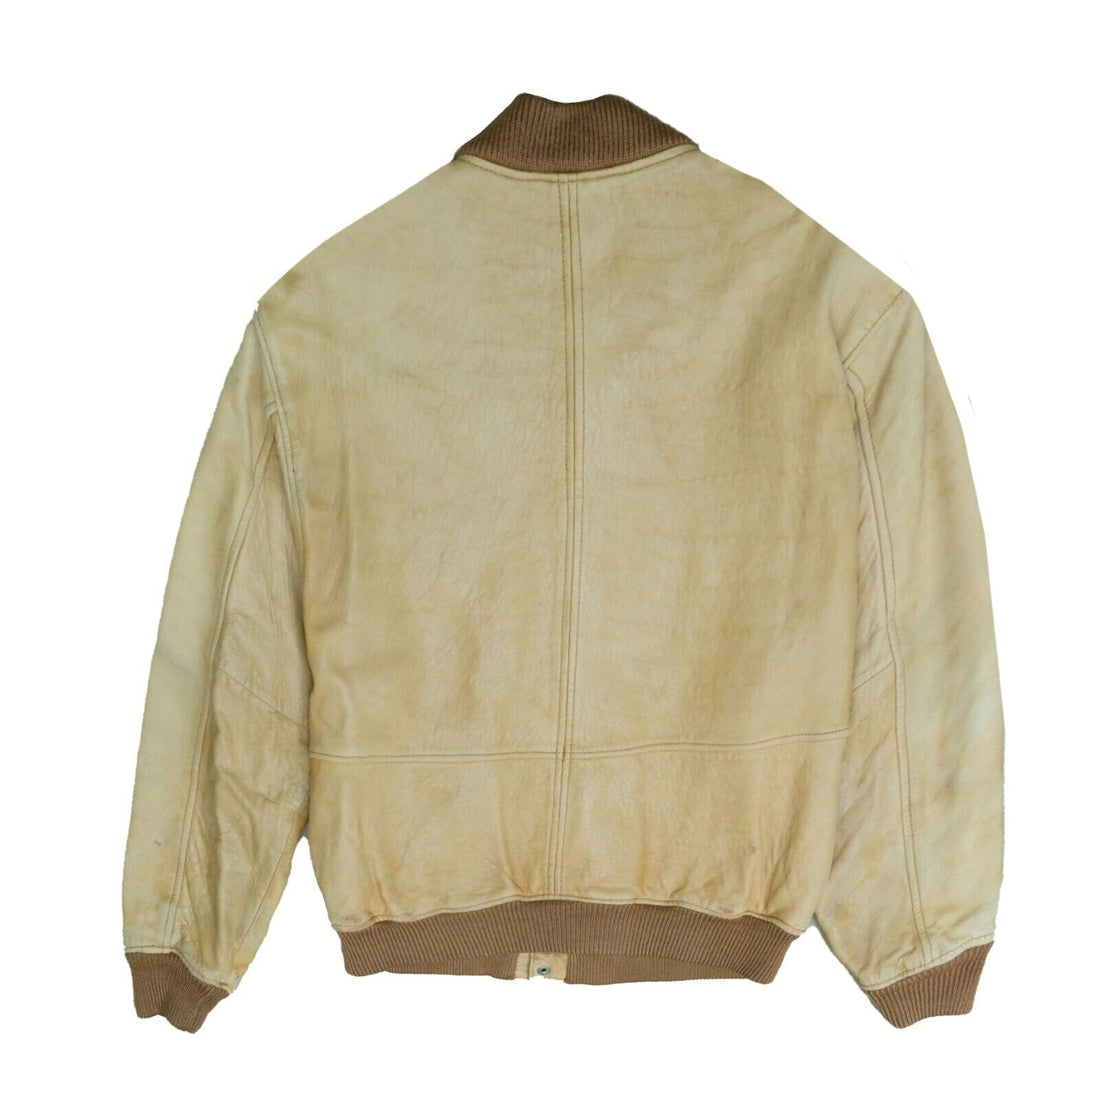 Vintage Banana Republic Leather Suede Bomber Jacket Size Medium 80s Brown